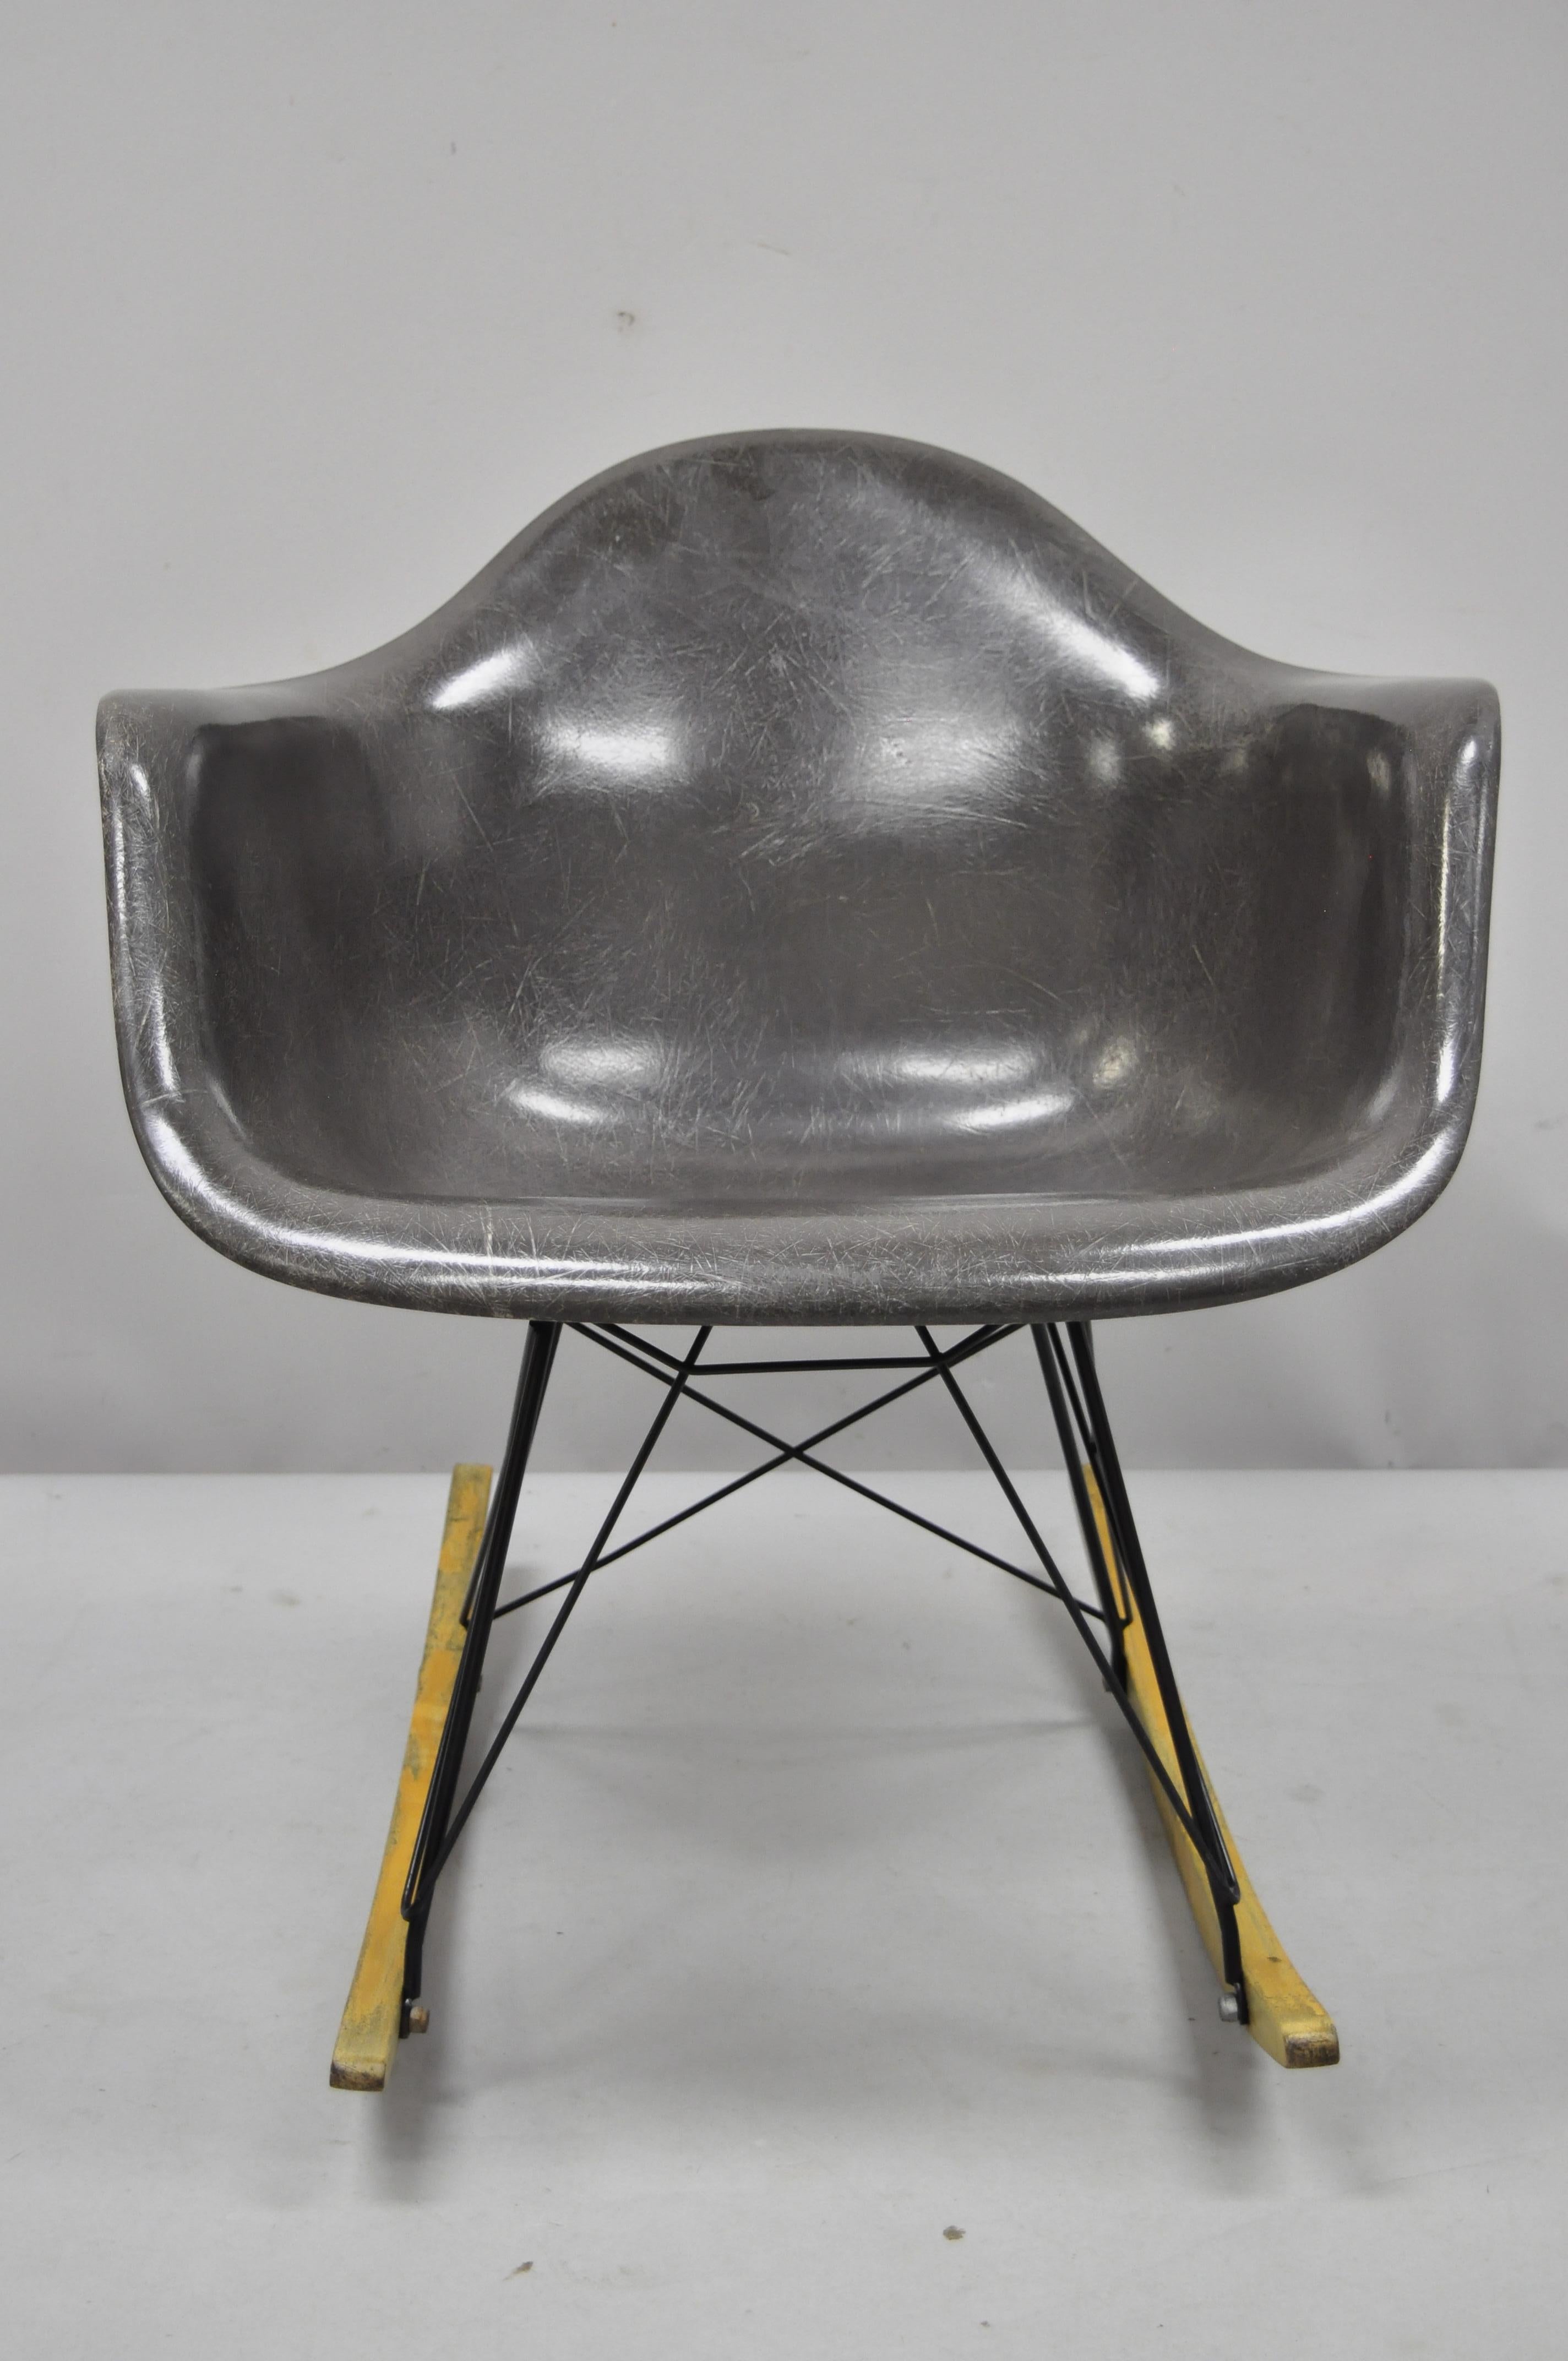 Vintage Mid-Century Modern Herman Miller Eames black fiberglass RAR rocking chair. Item features black fiberglass shell, original Herman Miller stamp to underside, very nice vintage item, circa mid-20th century. Measurements: 27